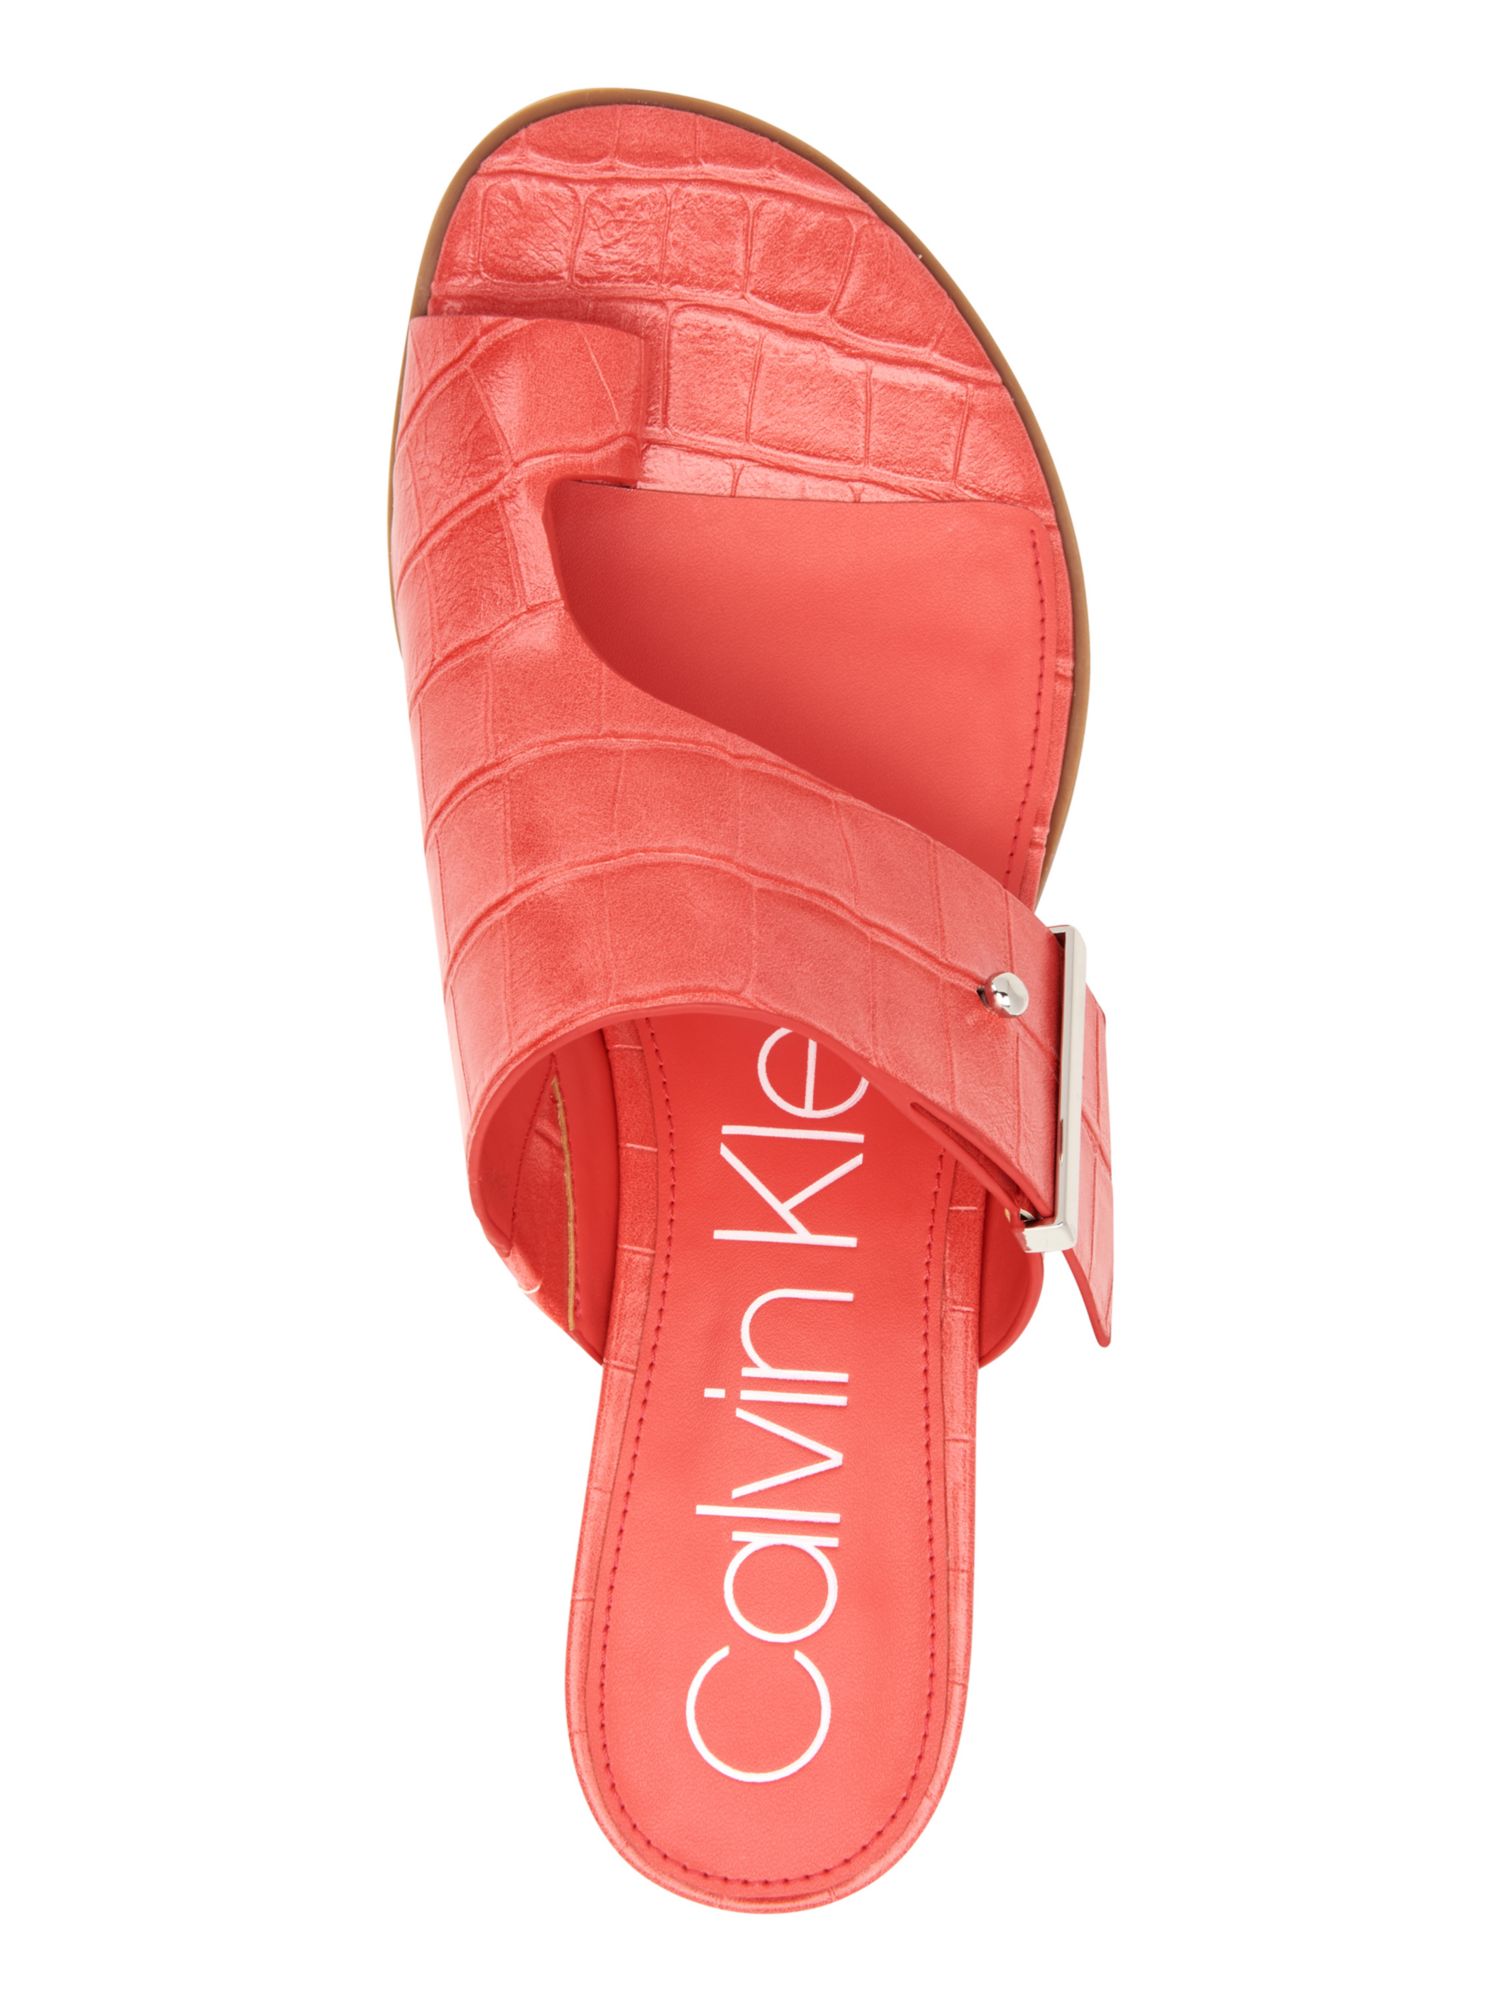 CALVIN KLEIN Womens Coral Croc Toe-Loop Padded Buckle Accent Daria Round Toe Block Heel Slip On Slide Sandals Shoes 5.5 M